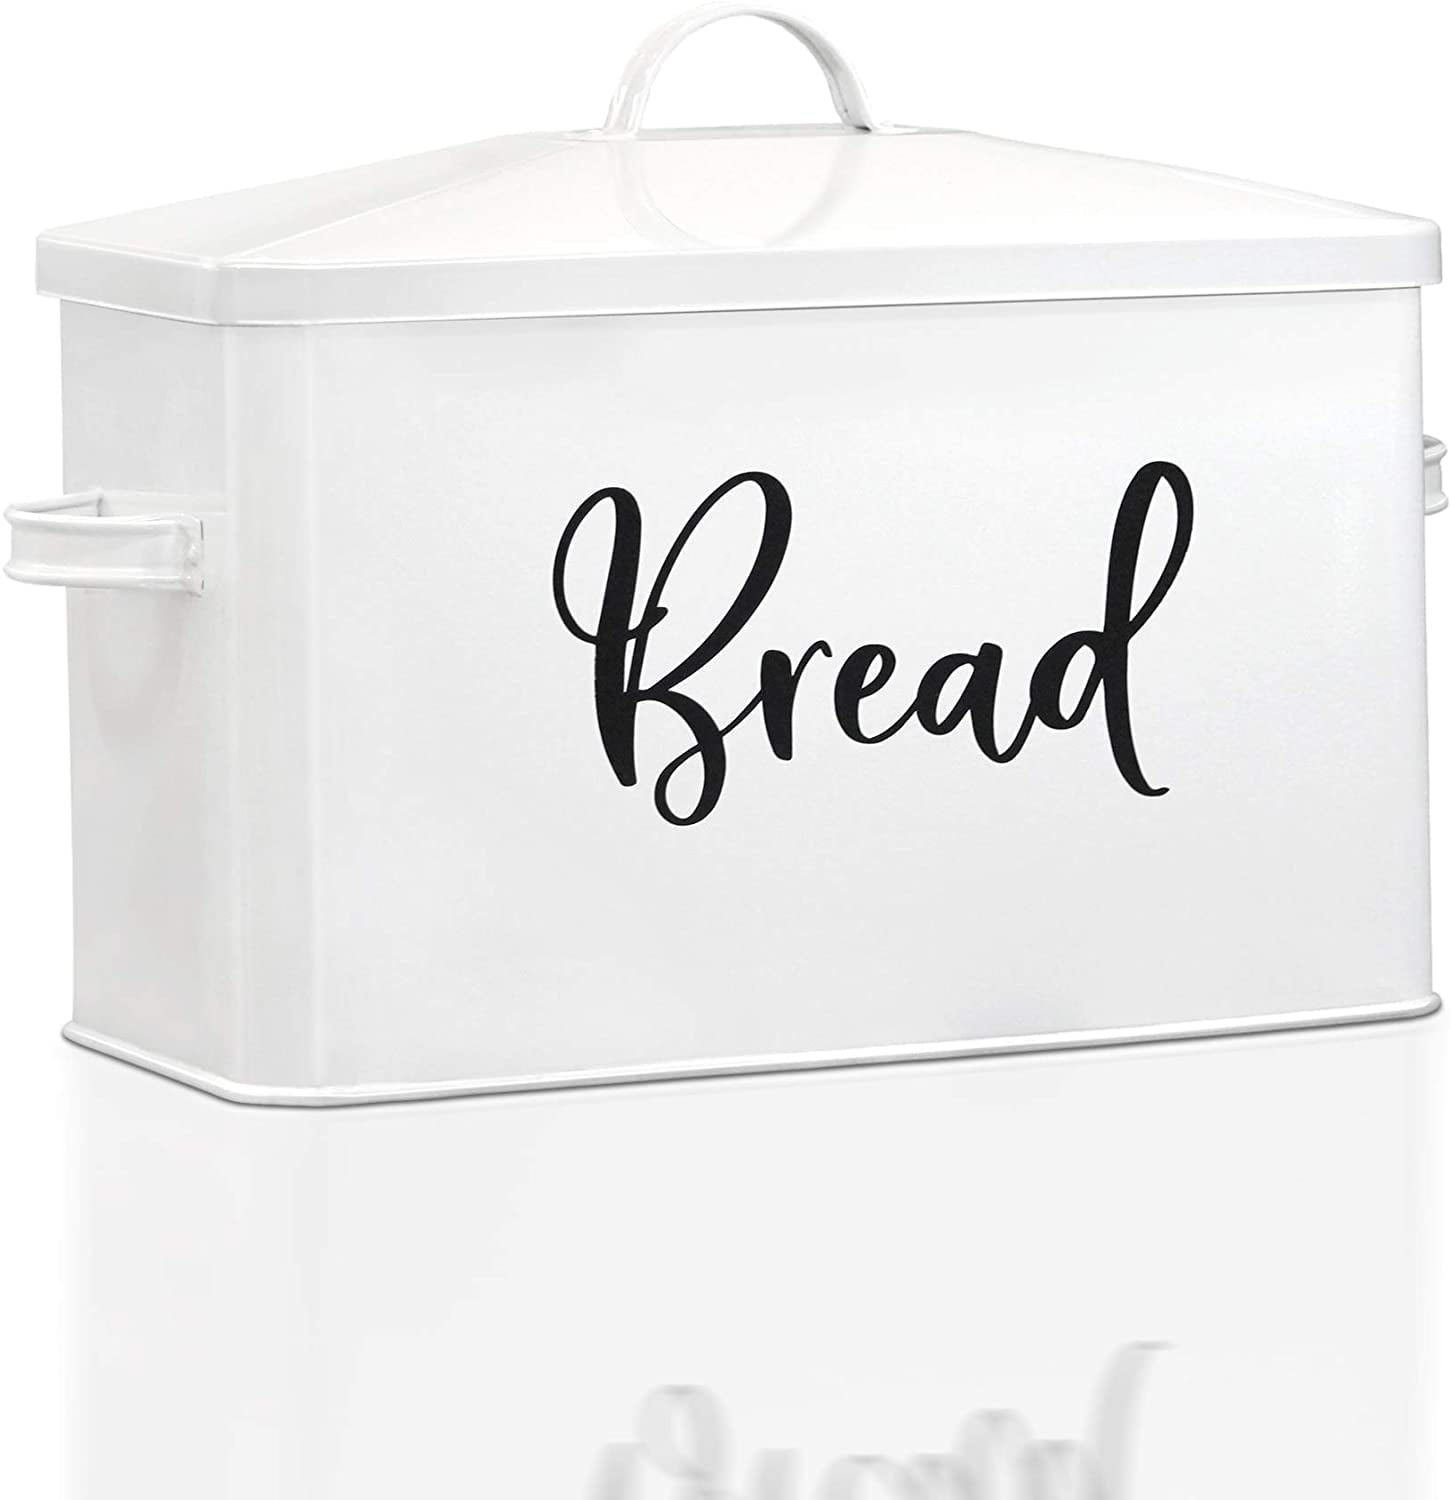 Bread Storage Box White Rustic Style Vintage Farmhouse Food Storage Container 